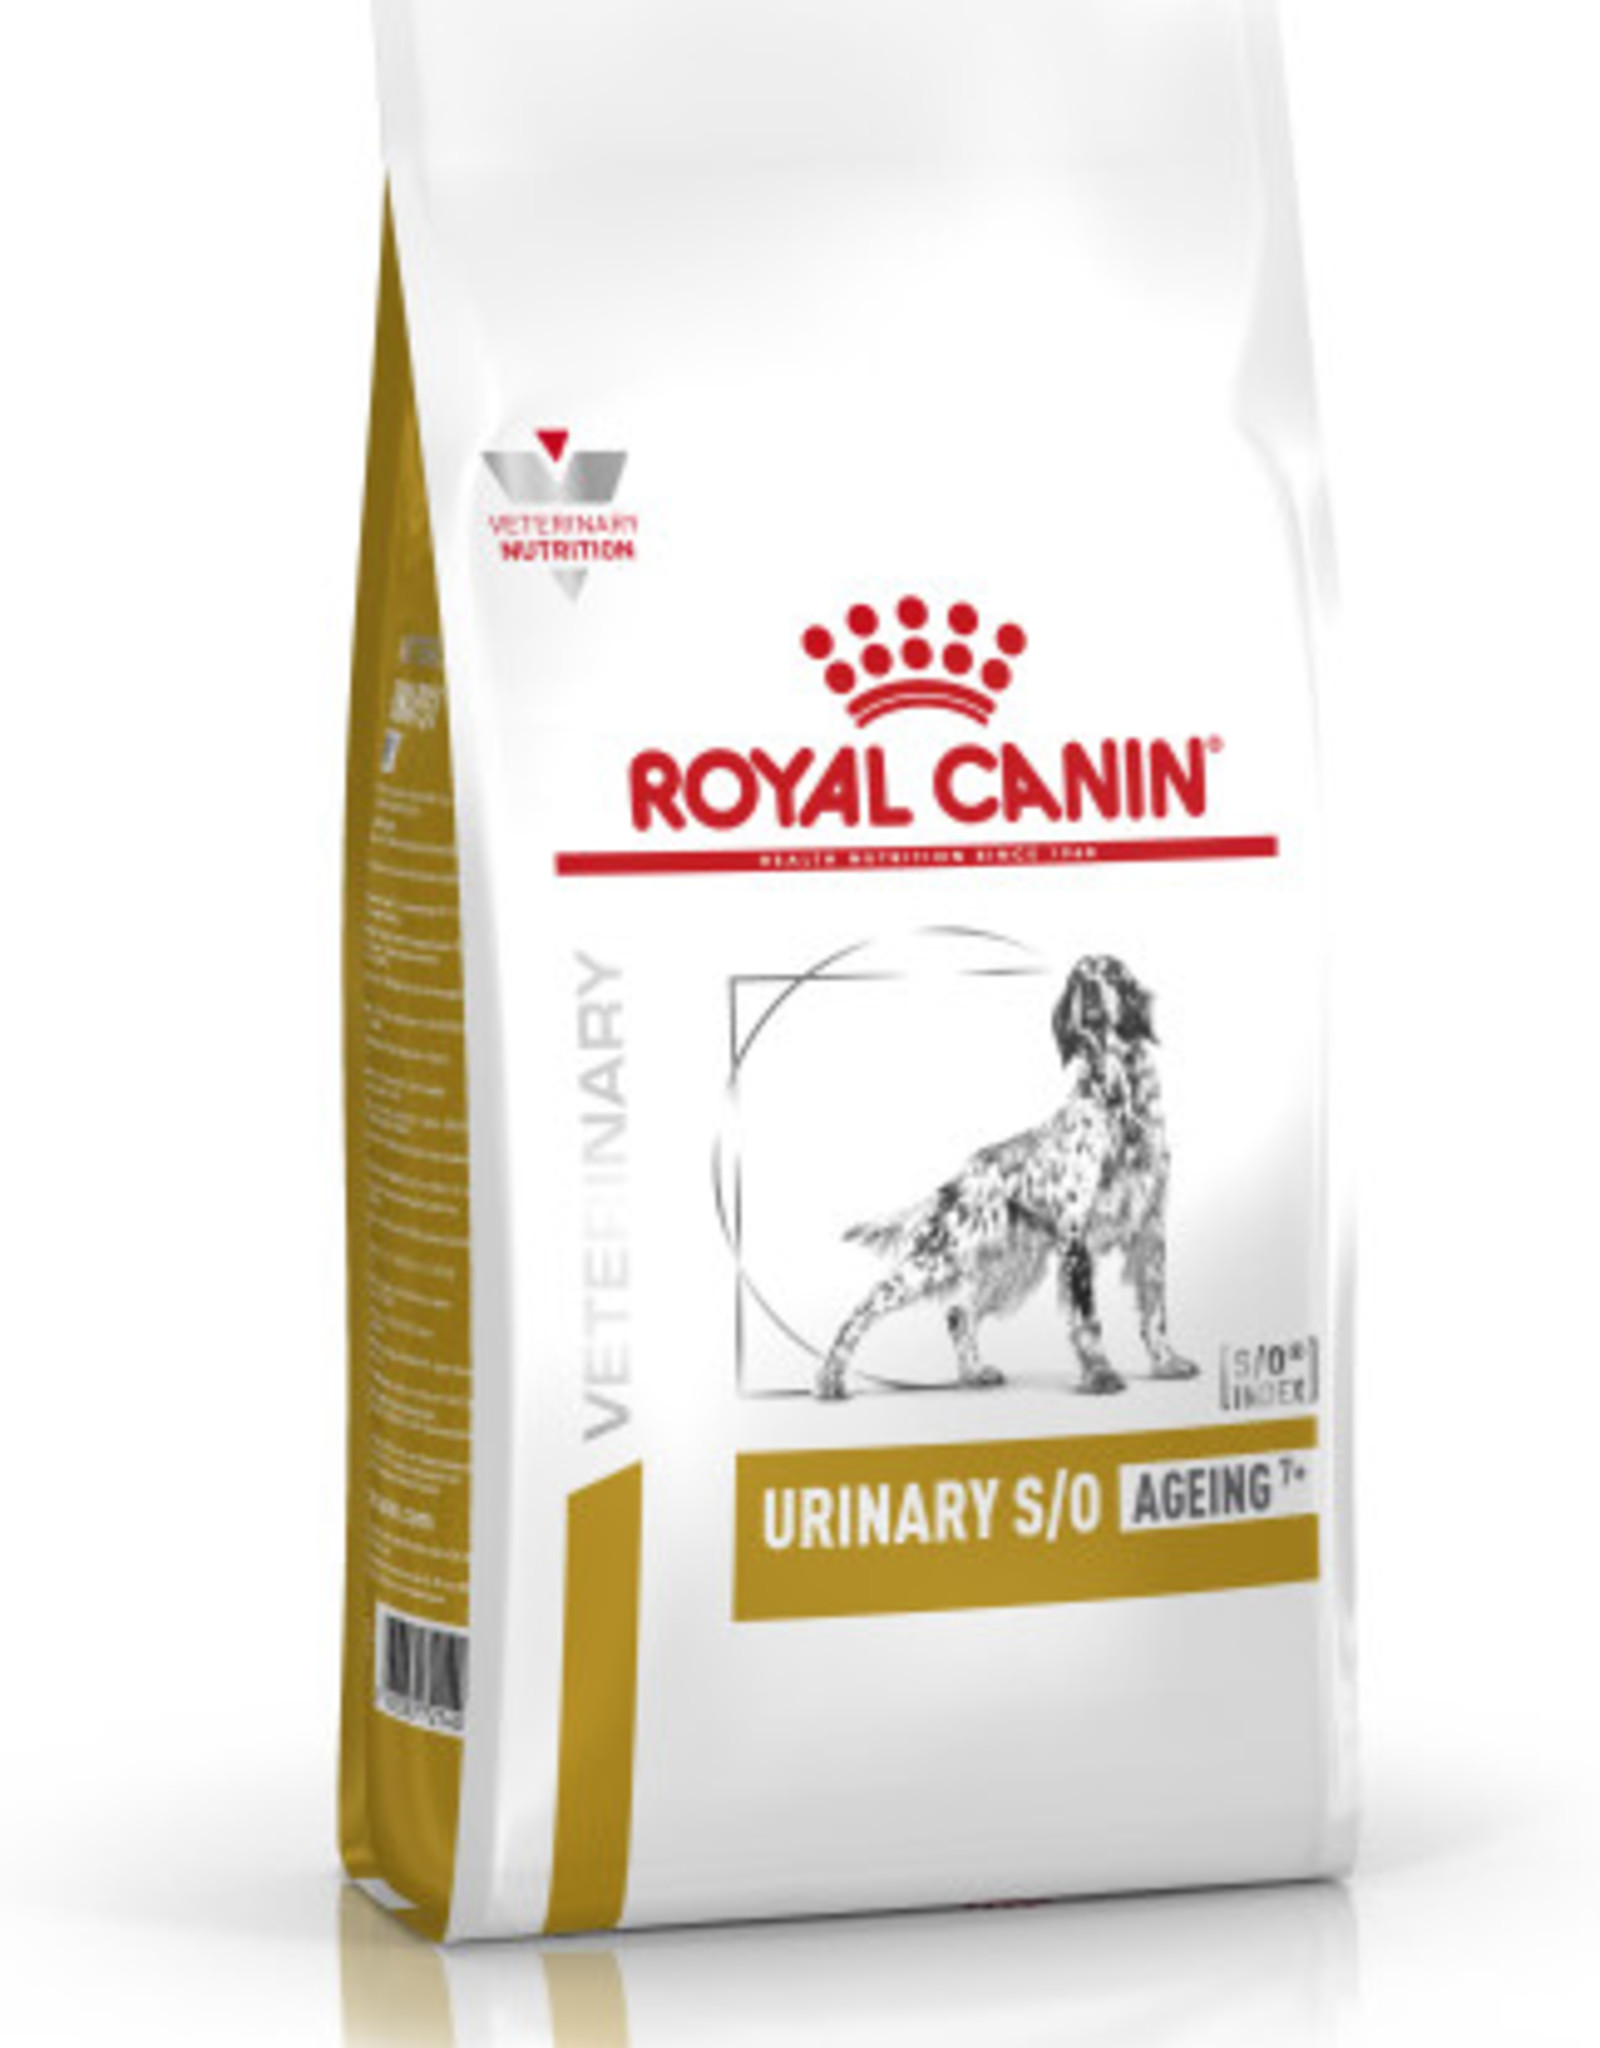 Royal Canin Royal Canin Urinary S/o Ageing Hund 1,5kg